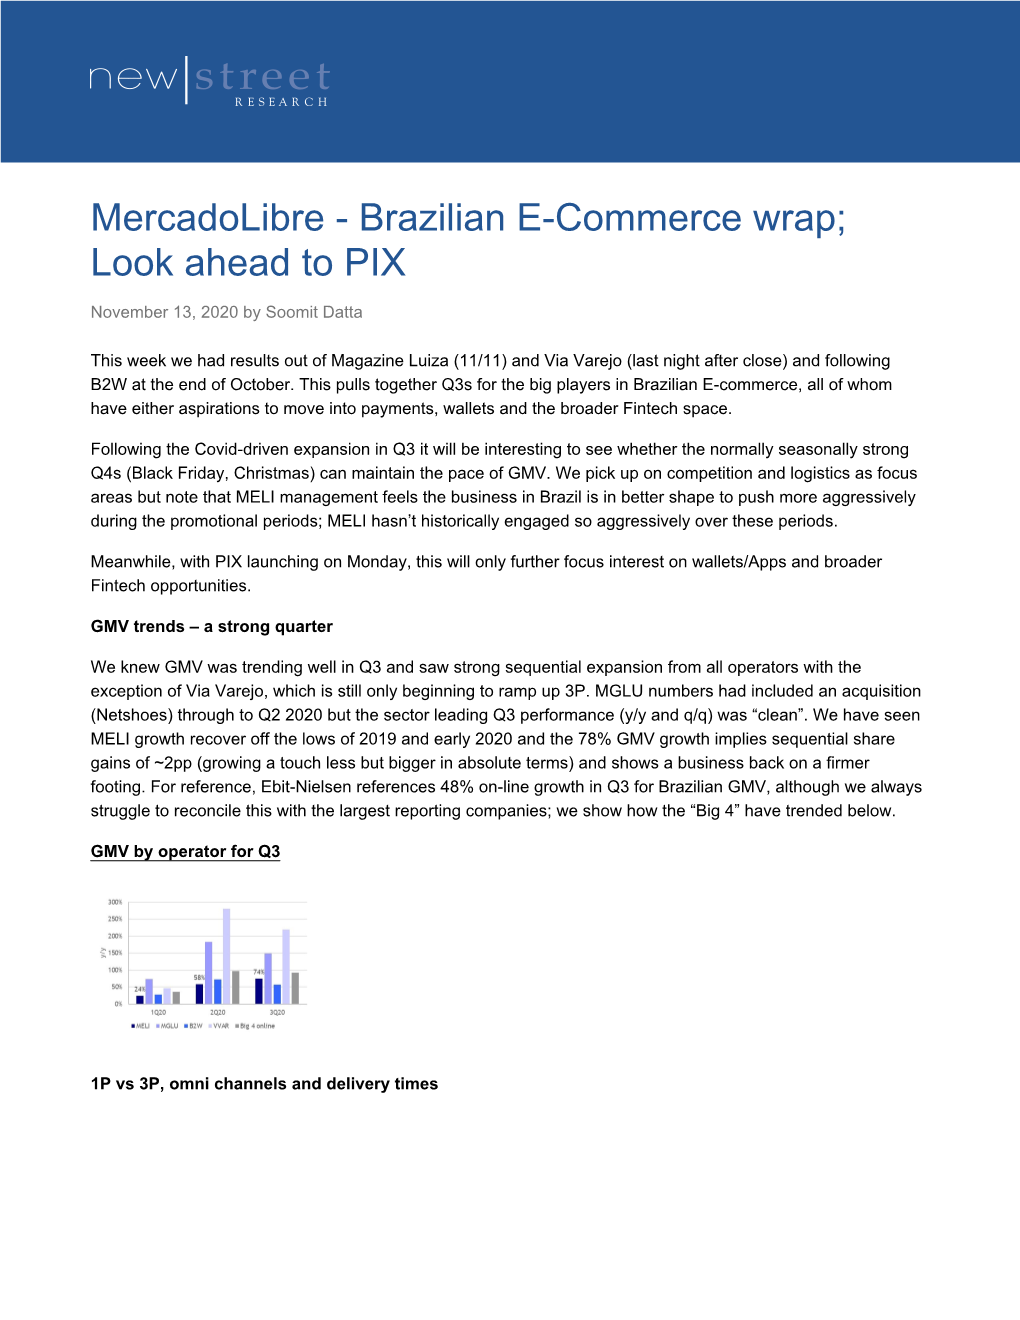 Mercadolibre - Brazilian E-Commerce Wrap; Look Ahead to PIX